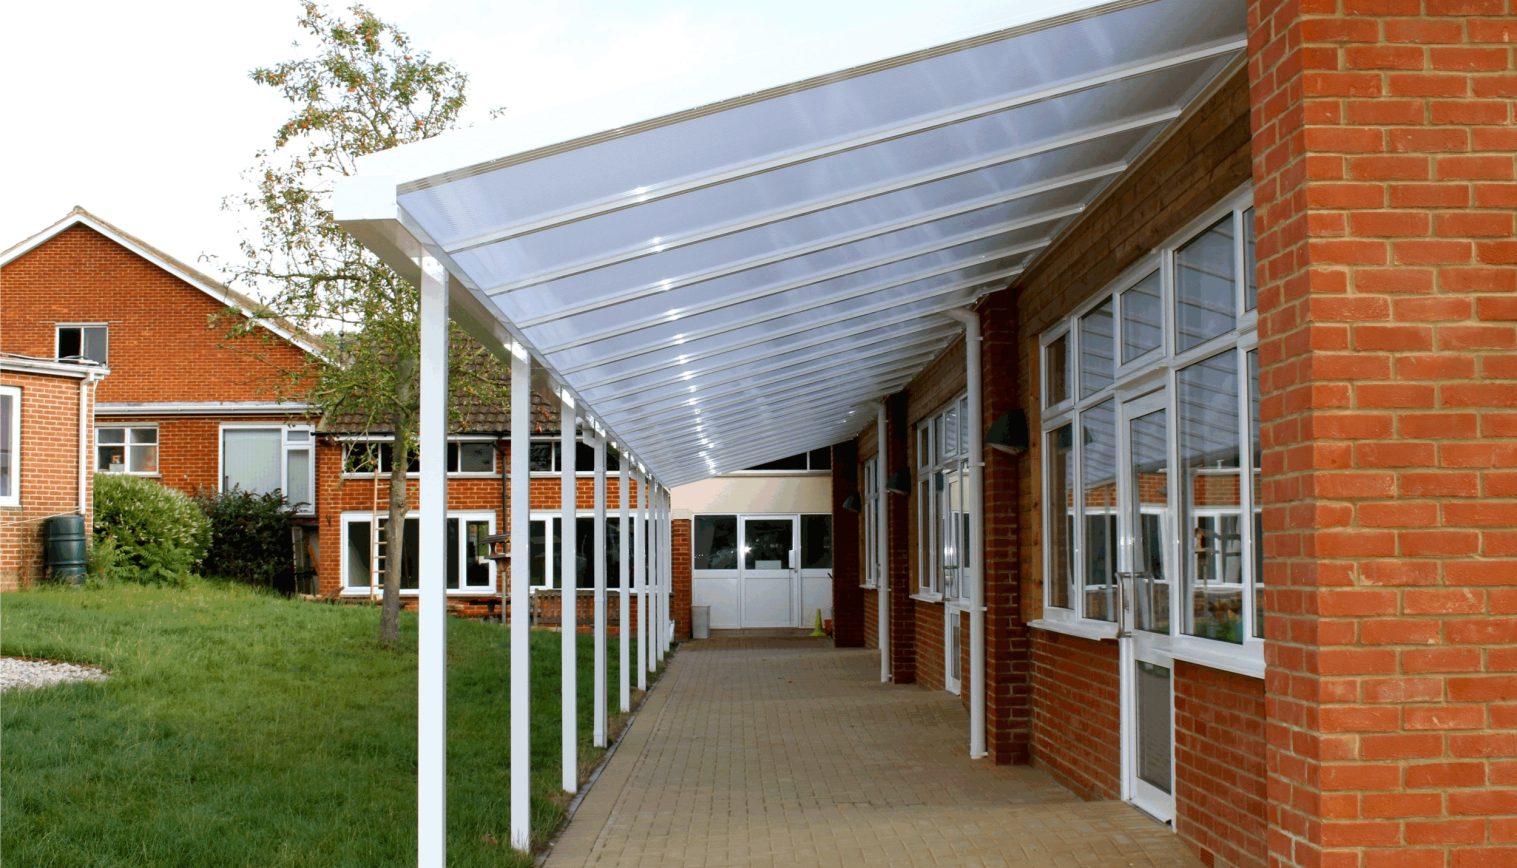 Meadow Vale School – Wall Mounted Canopy